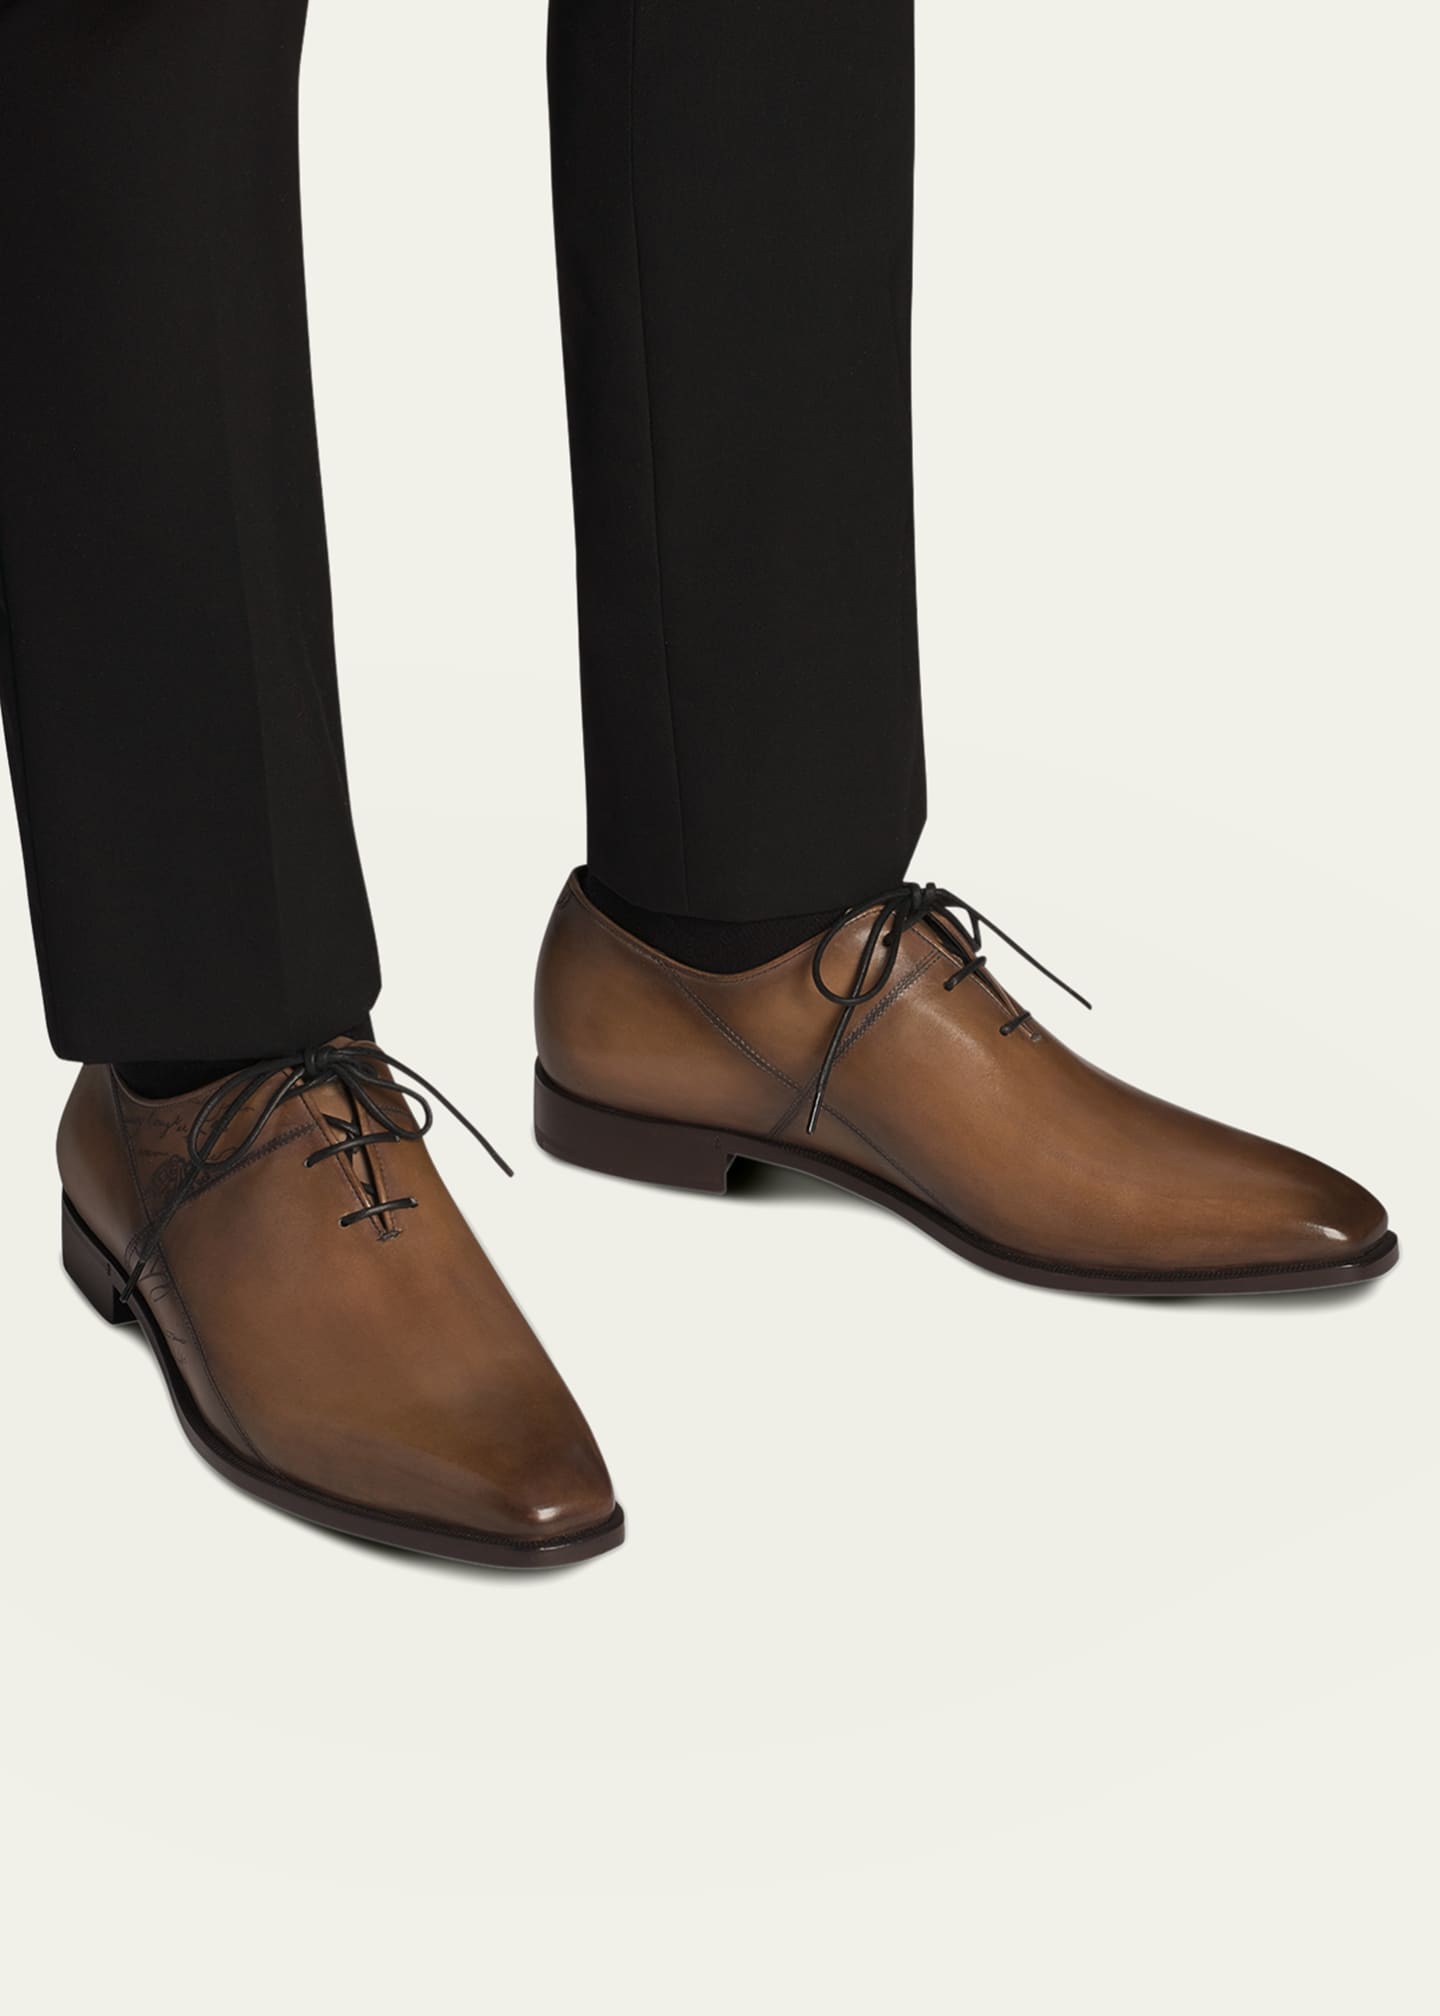 Berluti Men's Leather Oxford Shoes